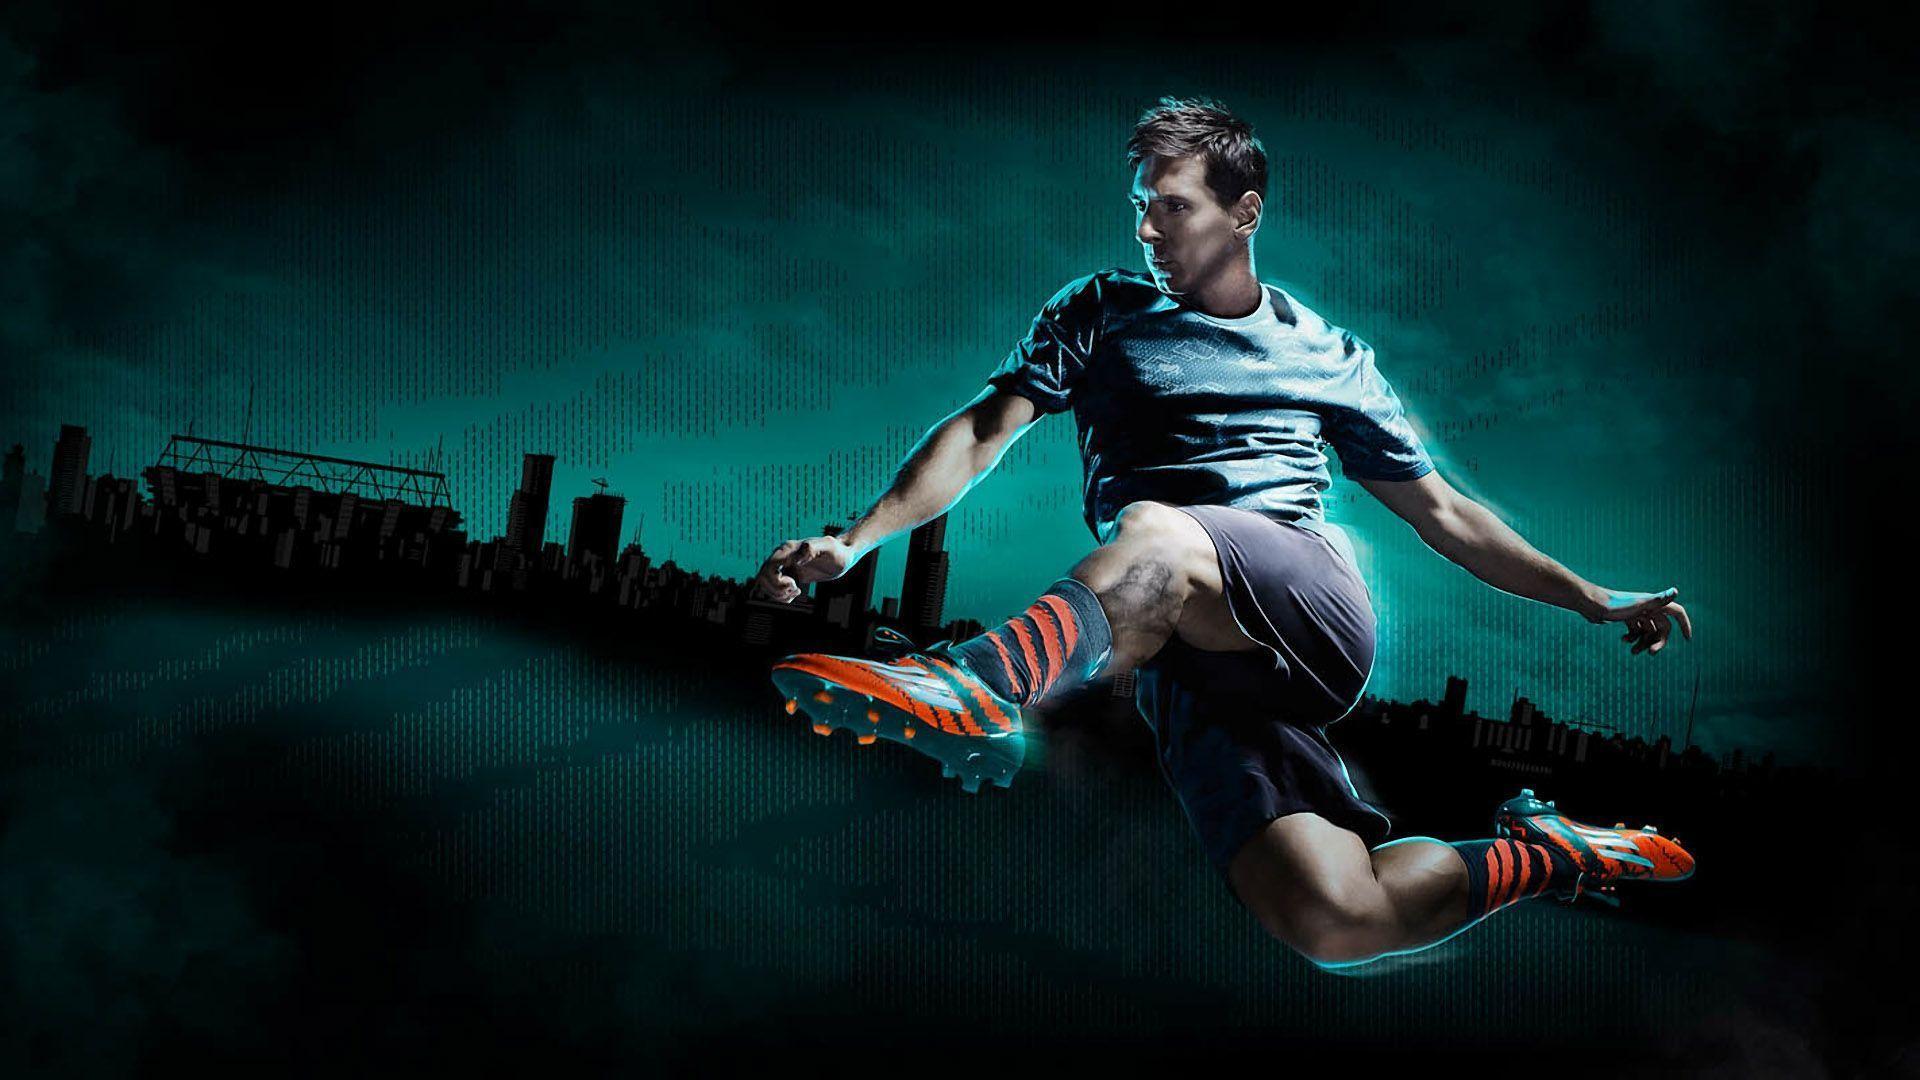 Leo Messi 2015 Adidas Mirosar10 Wallpaper Wide or HD. Male